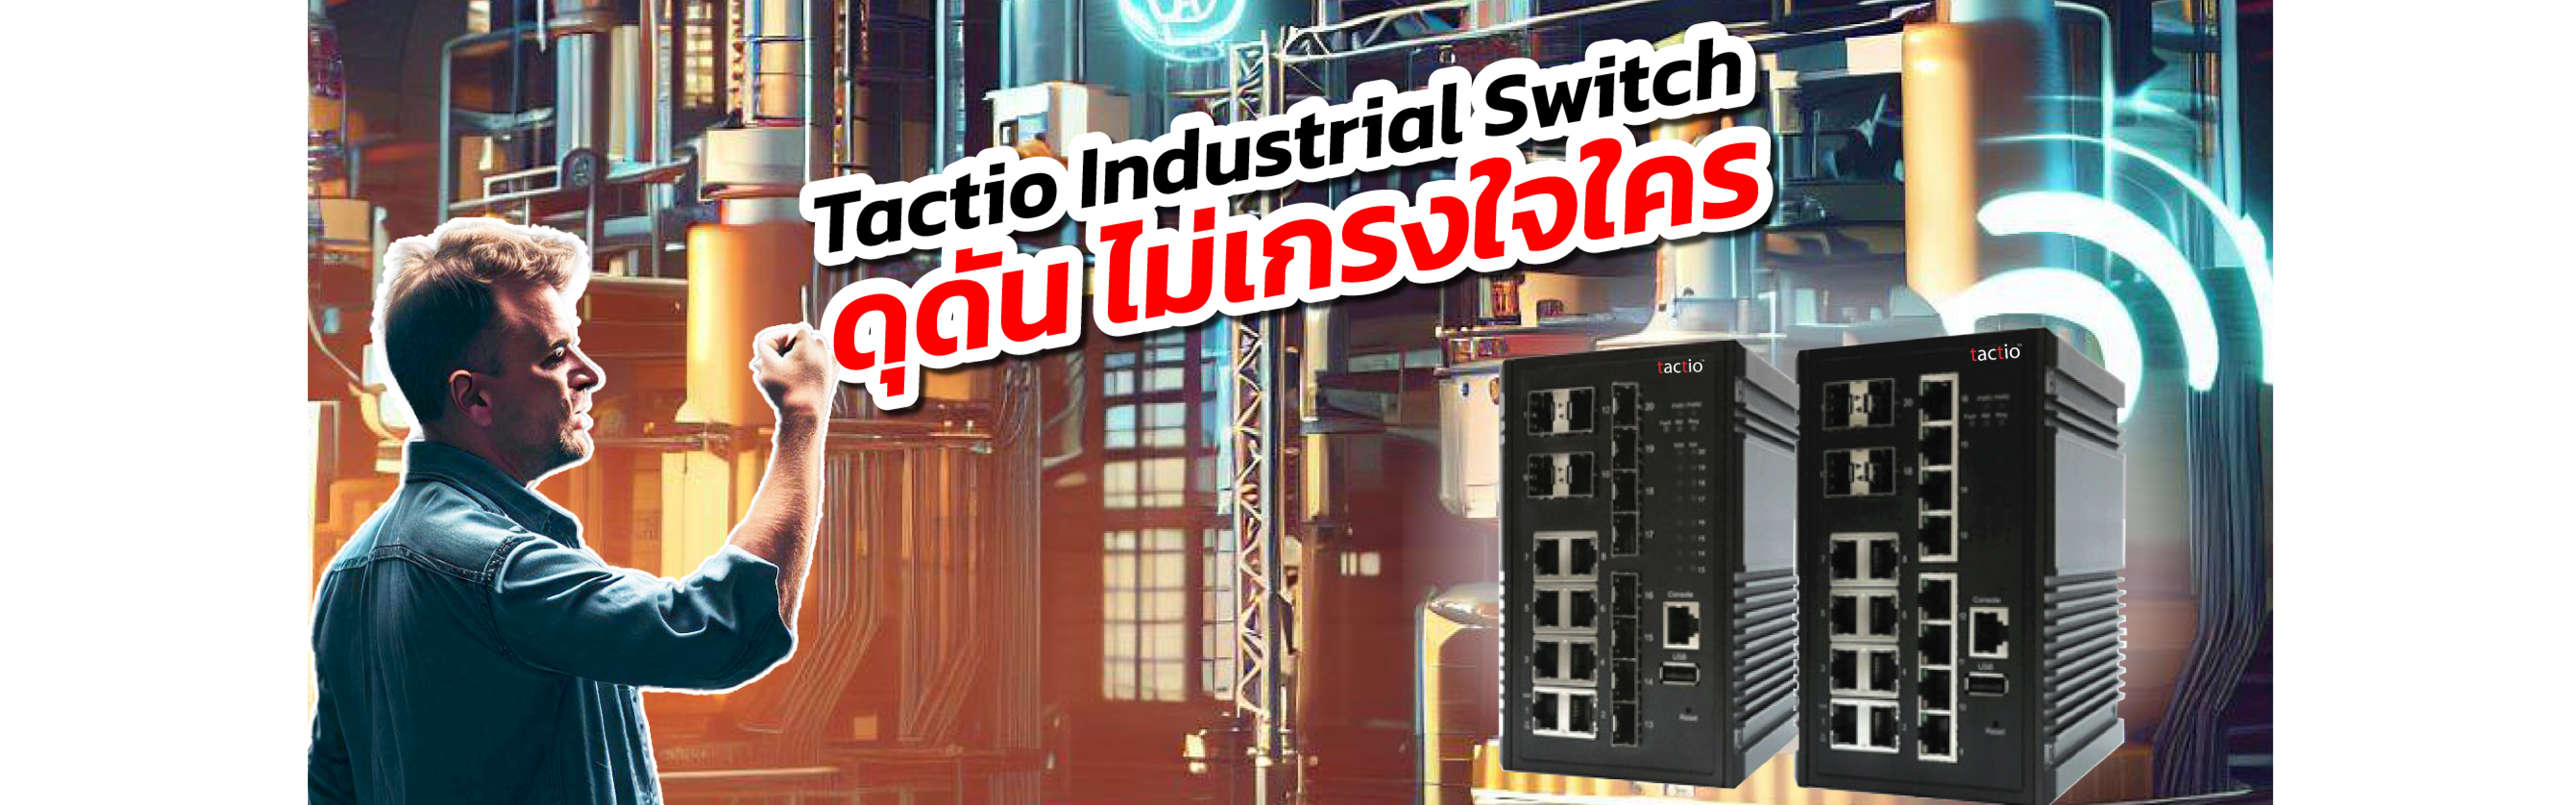 Tactio Industrial Switch ดุดัน ไม่เกรงใจครายยยยยย